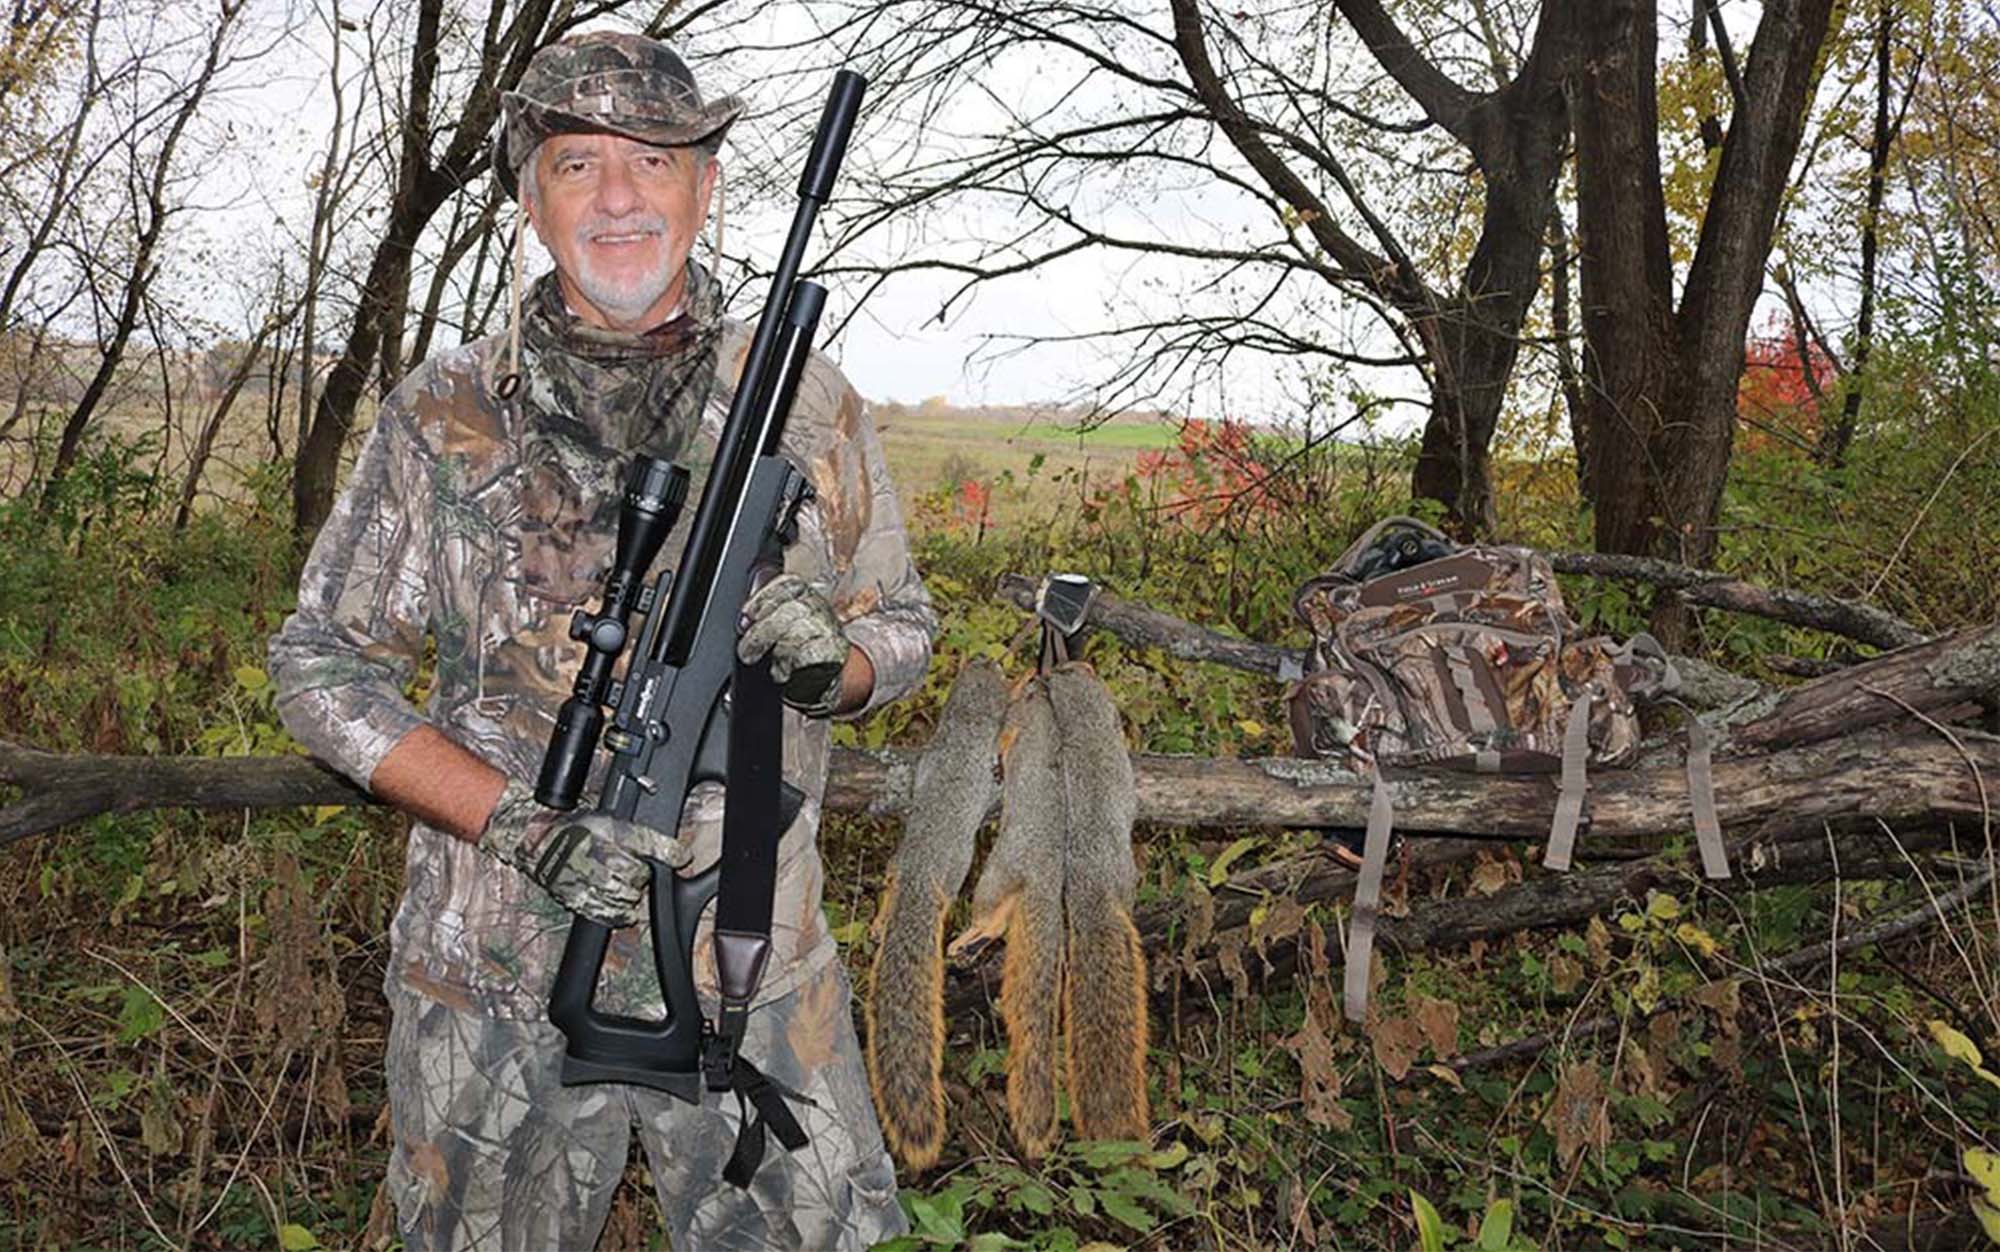 Jim Chapman hunting squirrels with an air rifle